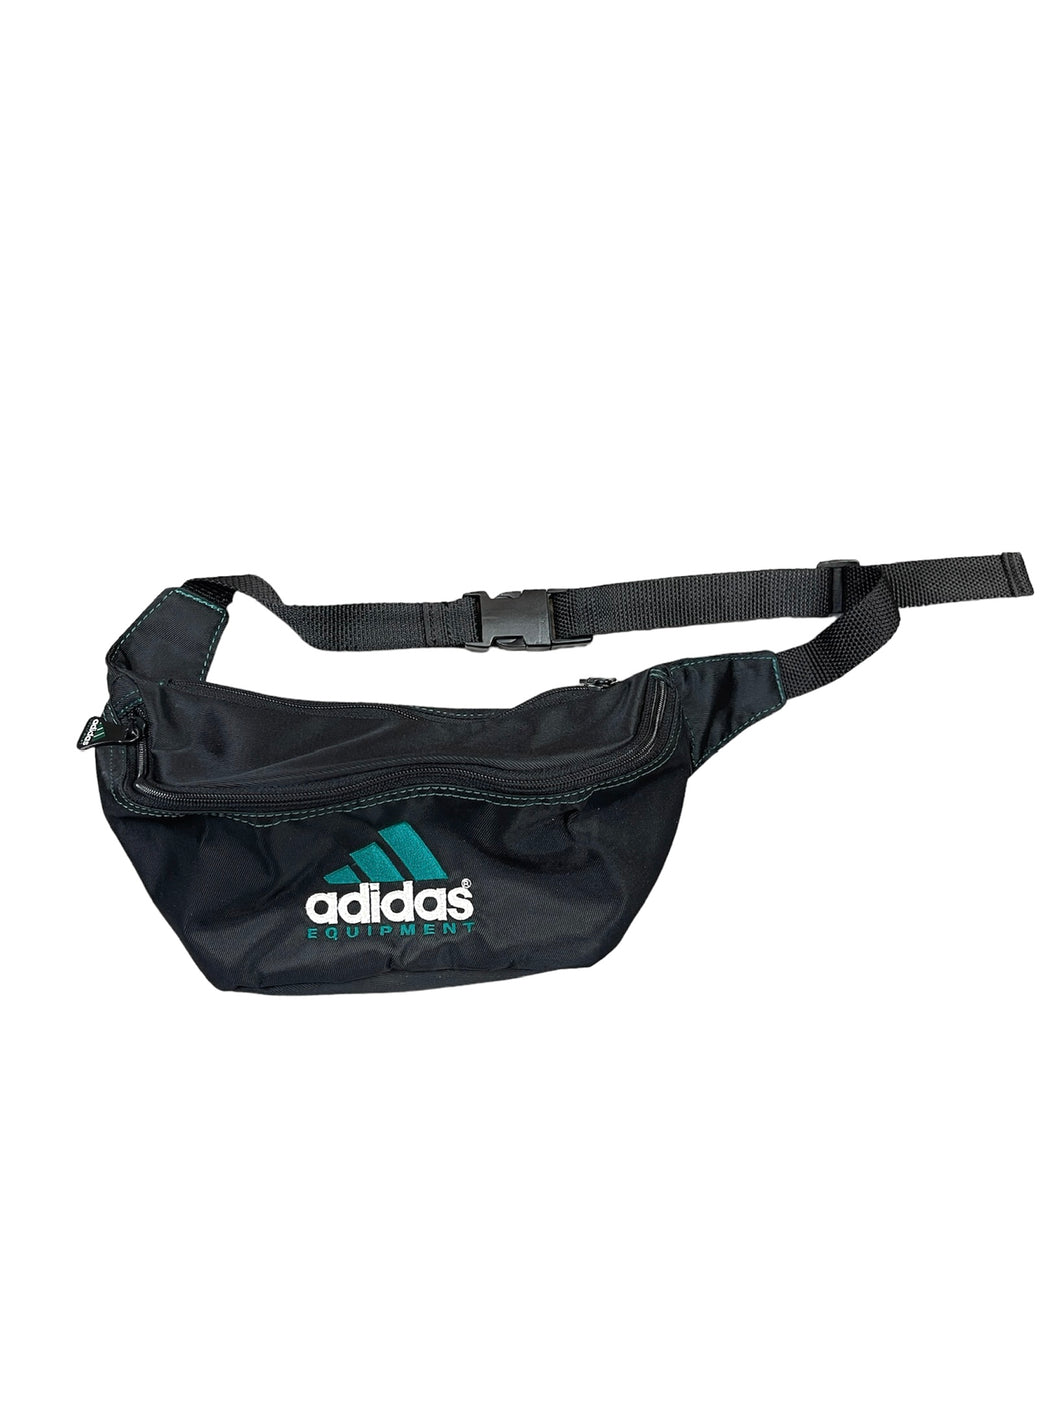 Adidas Equipment Cross Body Bag